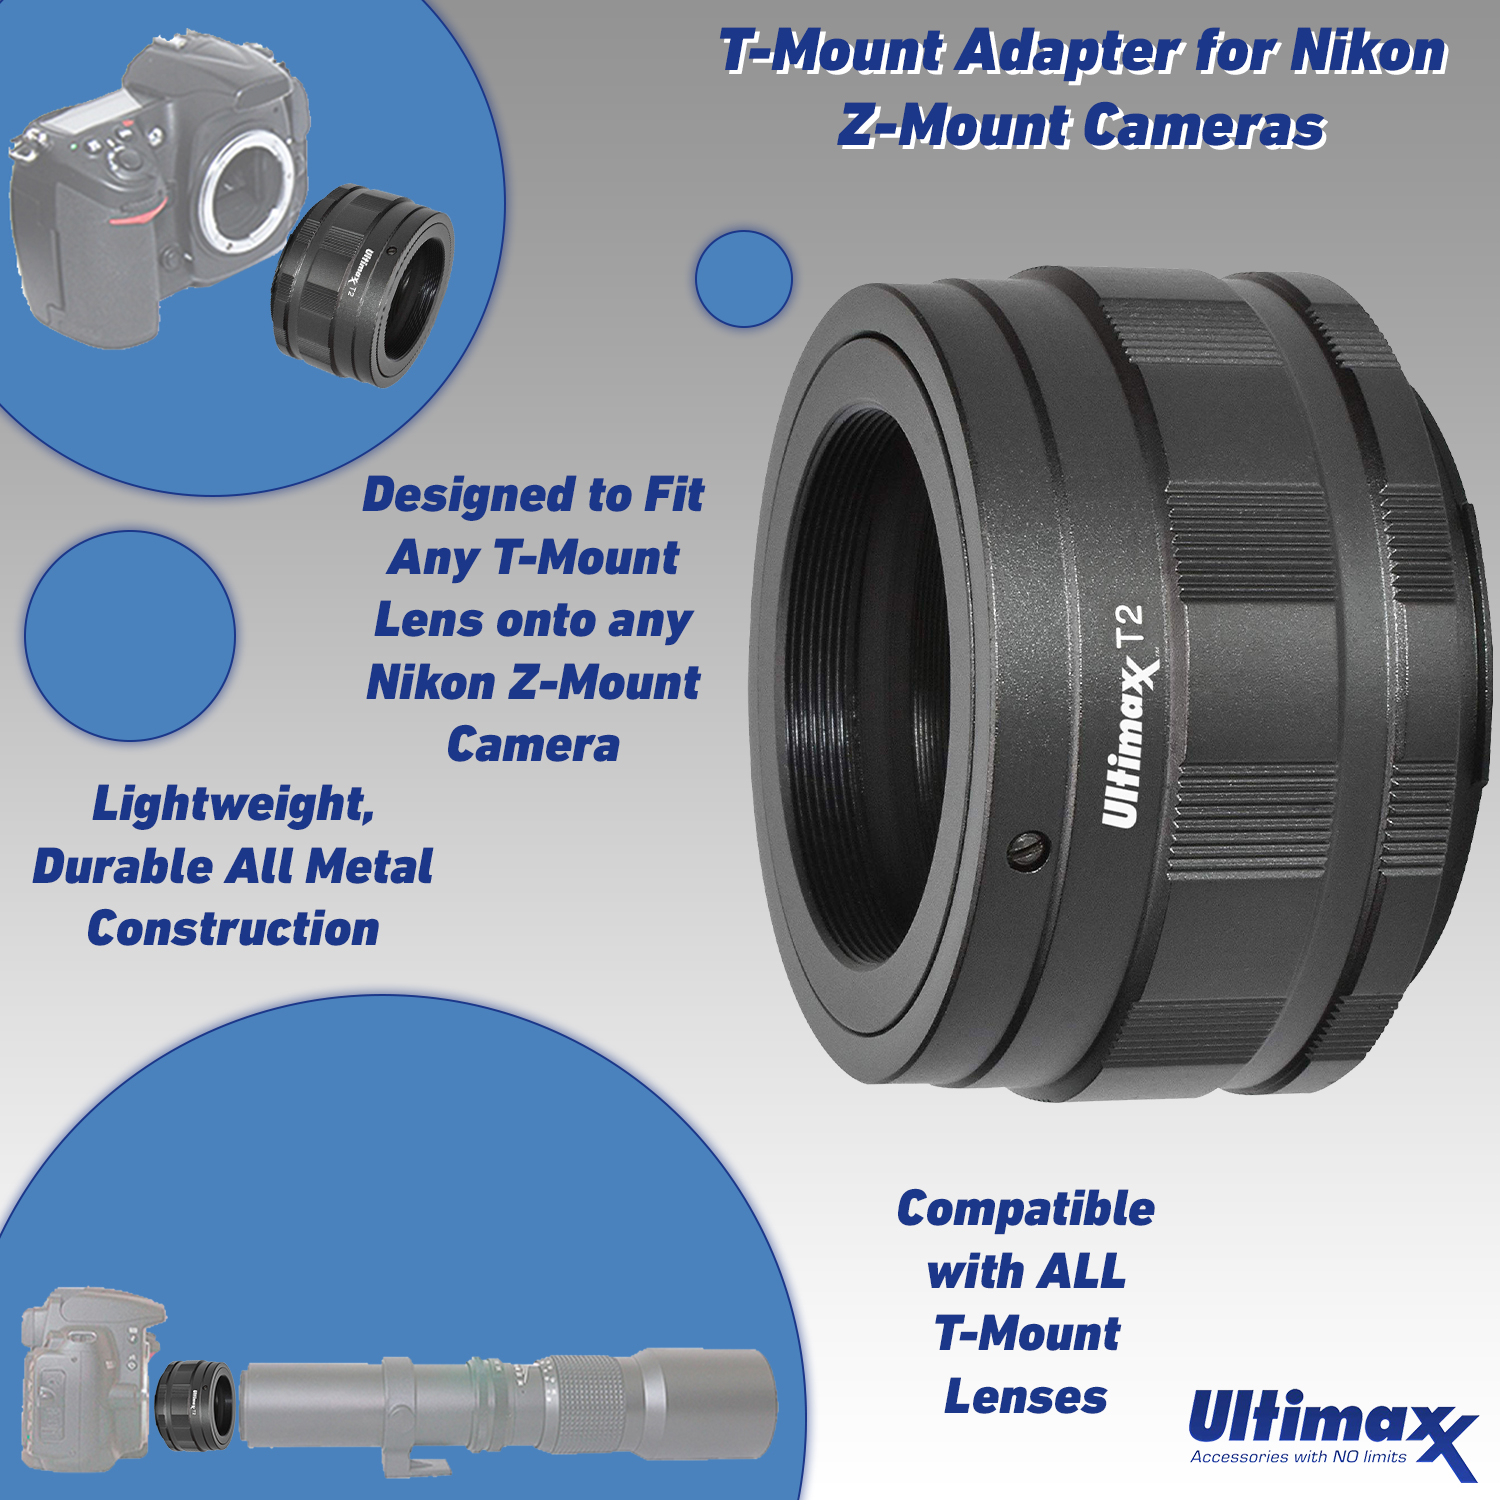 Ultimaxx 650-1300mm f/8-16 Manual Zoom Lens for Nikon Z7, Z7 II, Z6, Z6 II, Z5, Z50 Mirrorless Cameras & Other Z-Mount Cameras & Basic Bundle - Includes: 2x Converter for T-Mount Lenses & More - image 4 of 6